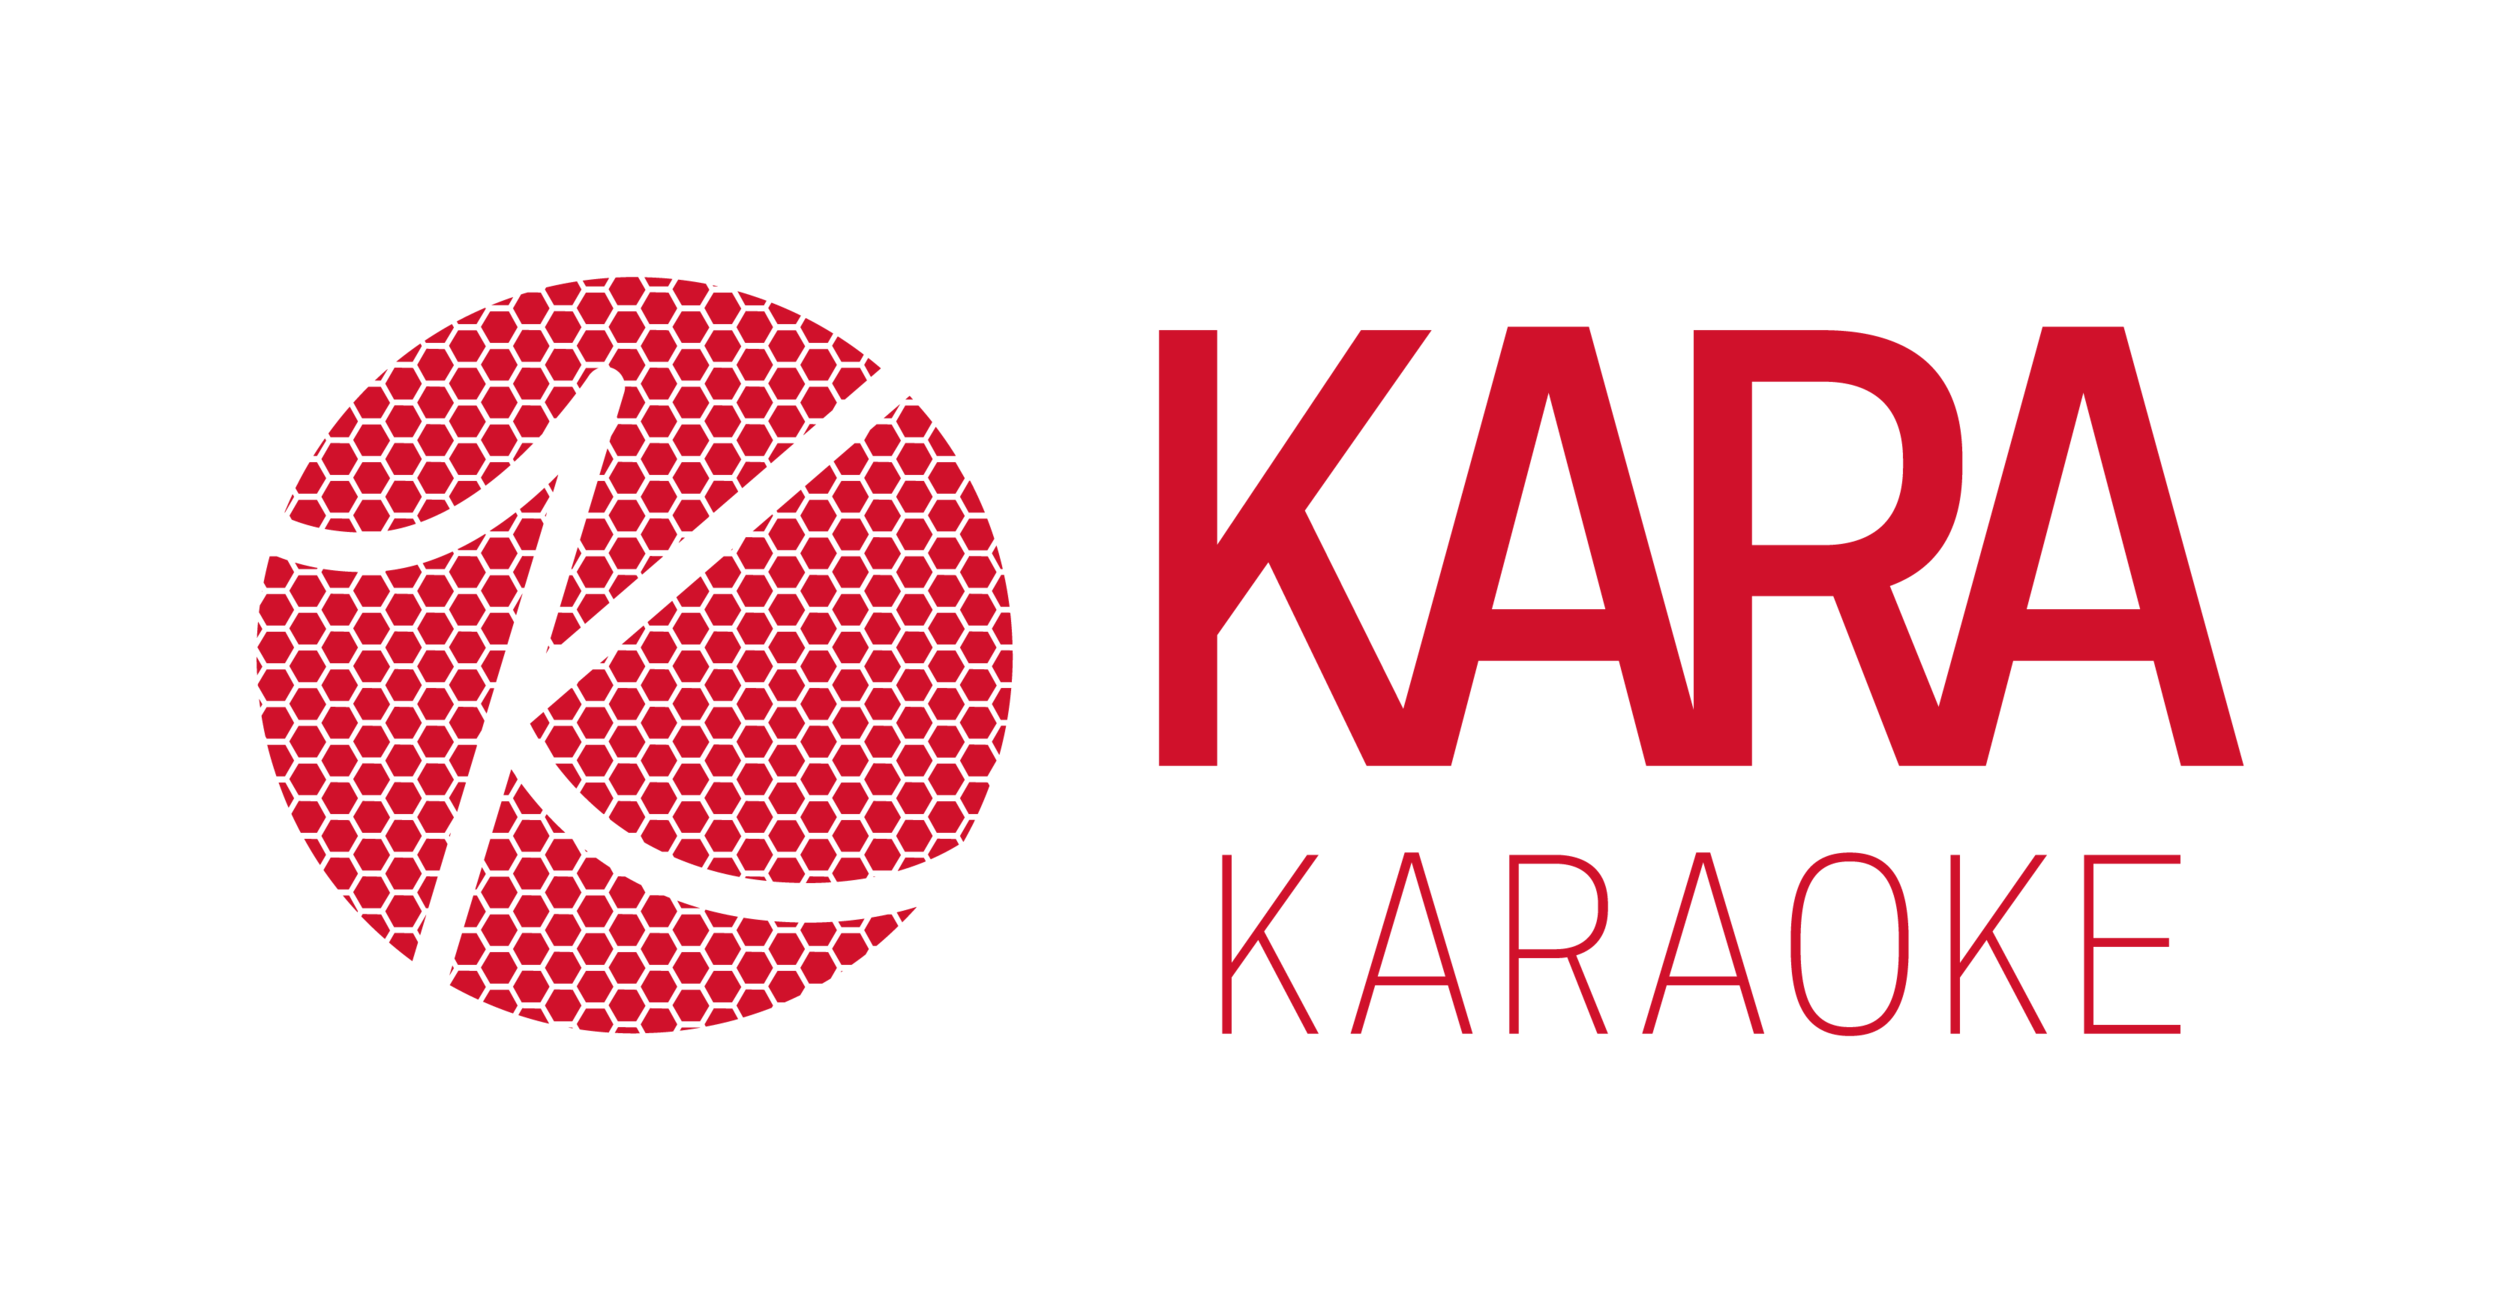 Kara Karaoke Entertainment - Karaoke That Comes to You!